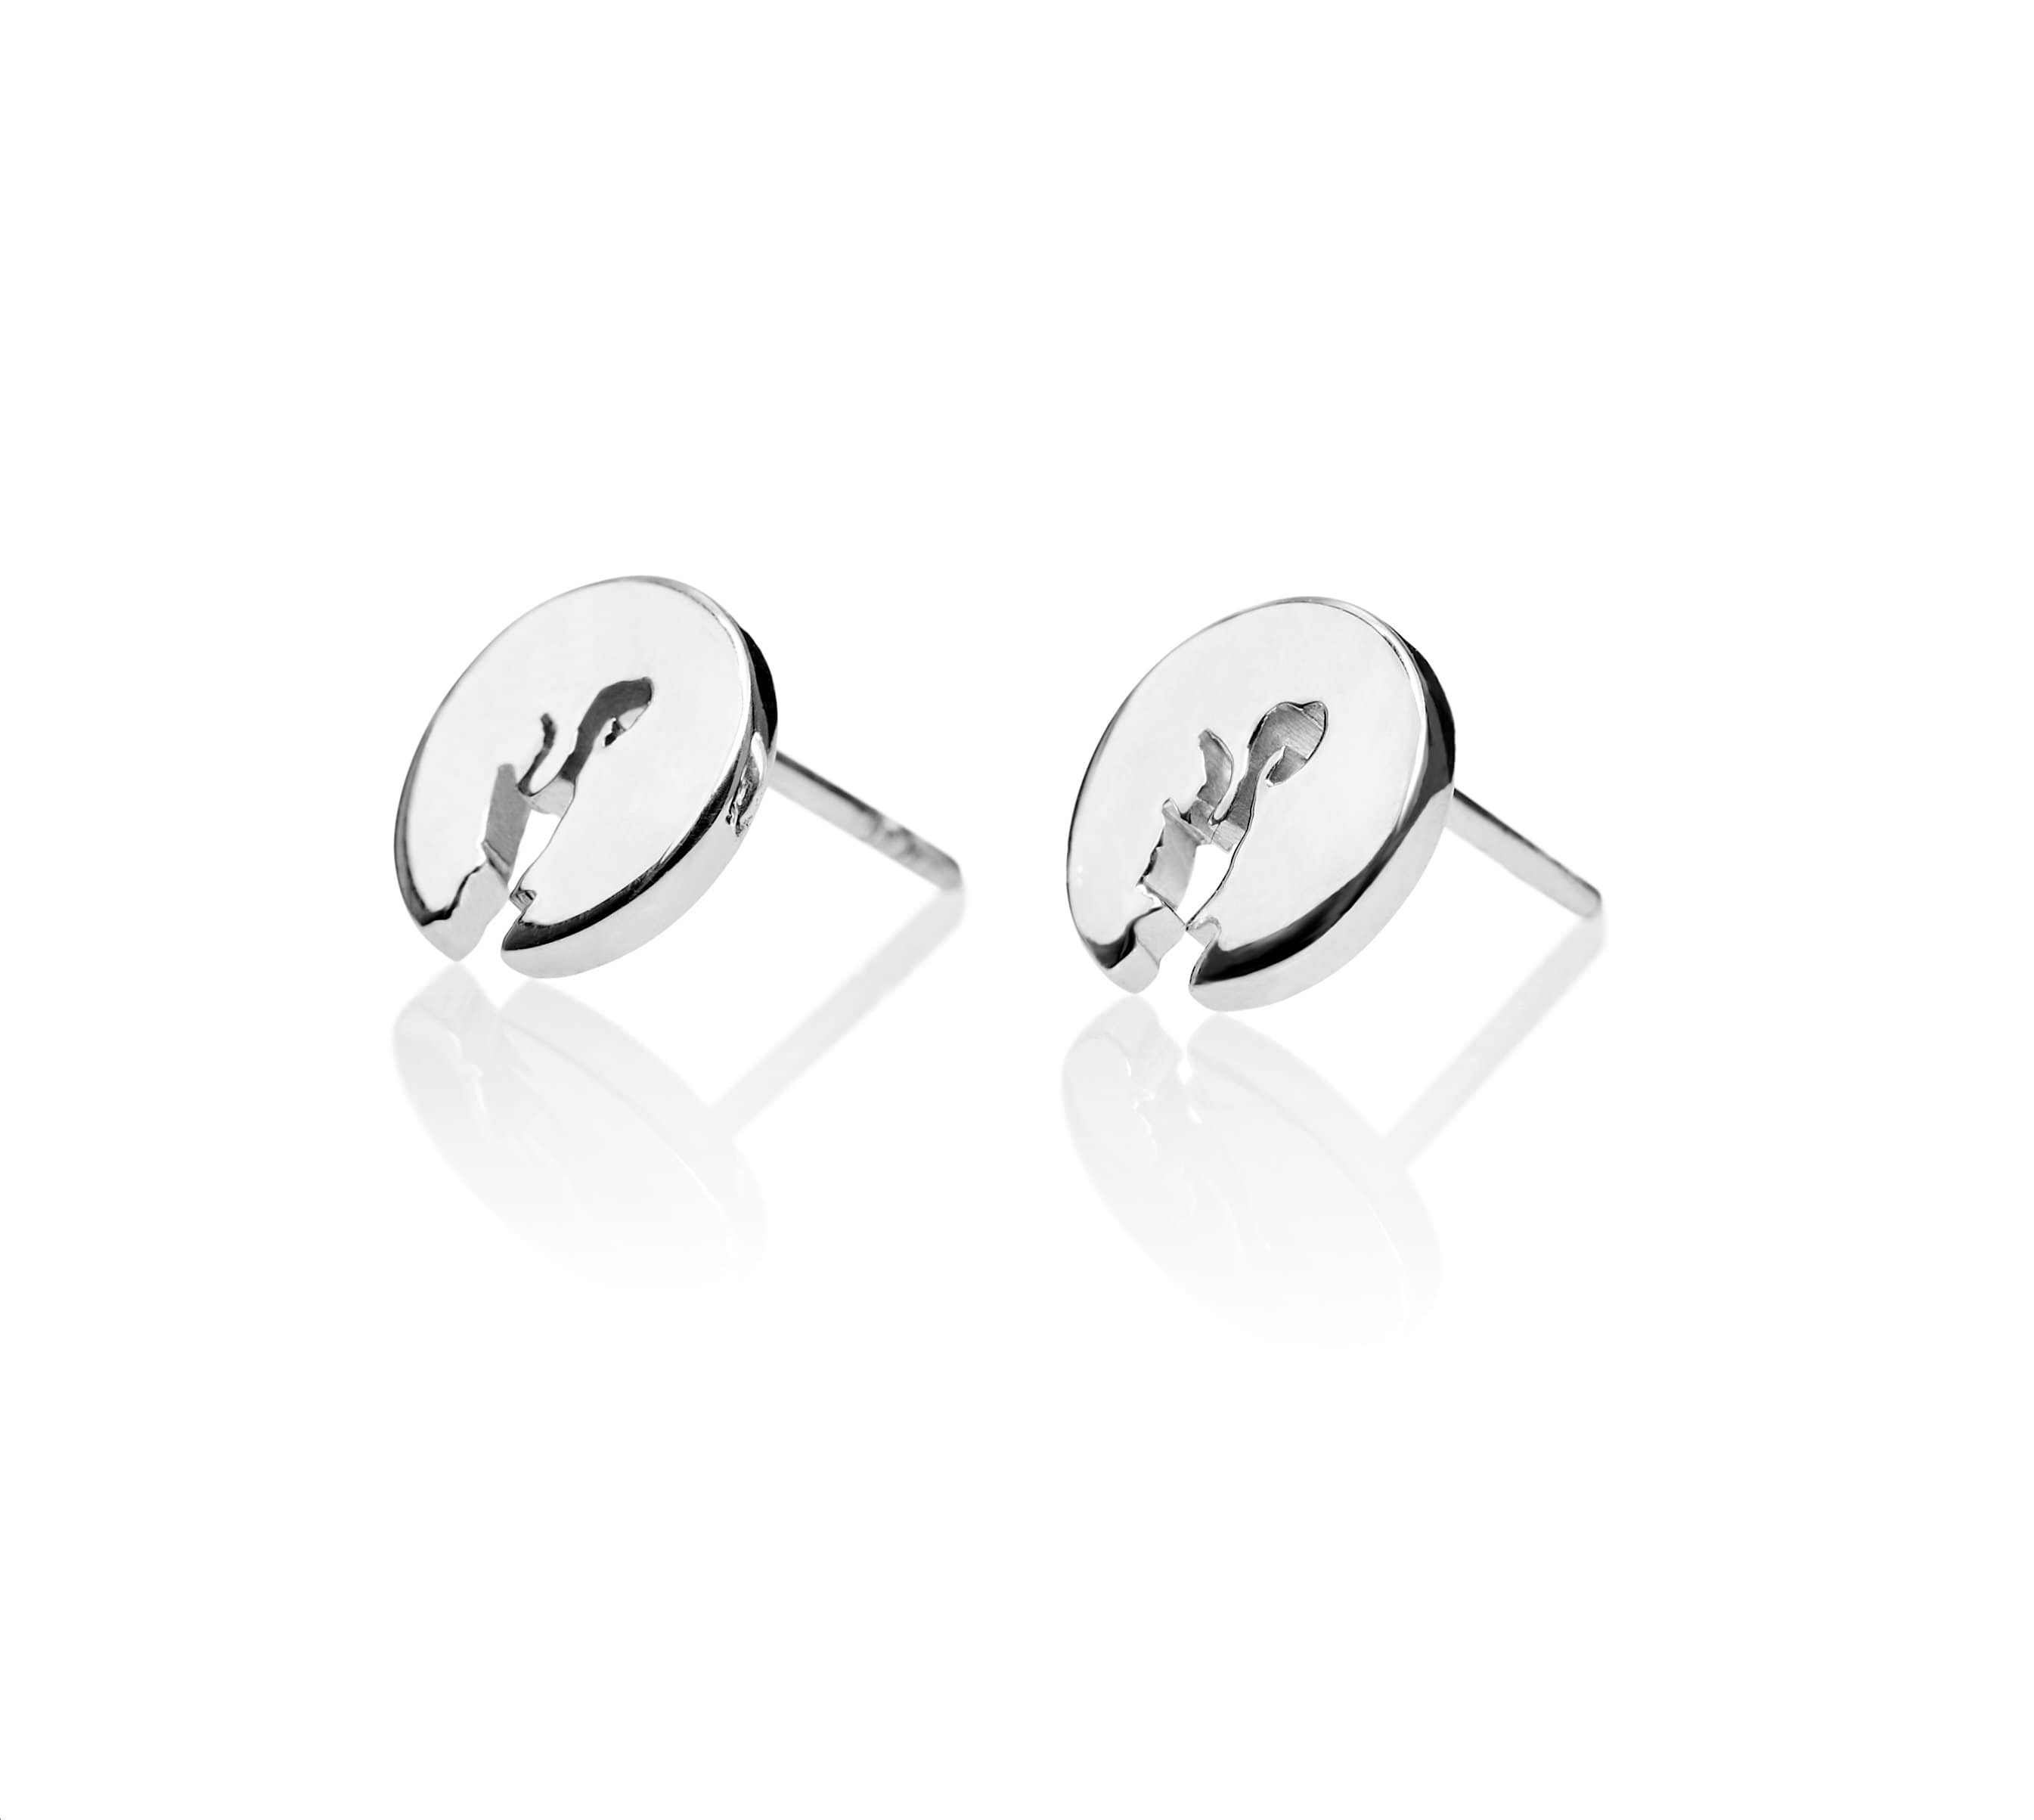 Earrings 9 mm with Oslofjord design